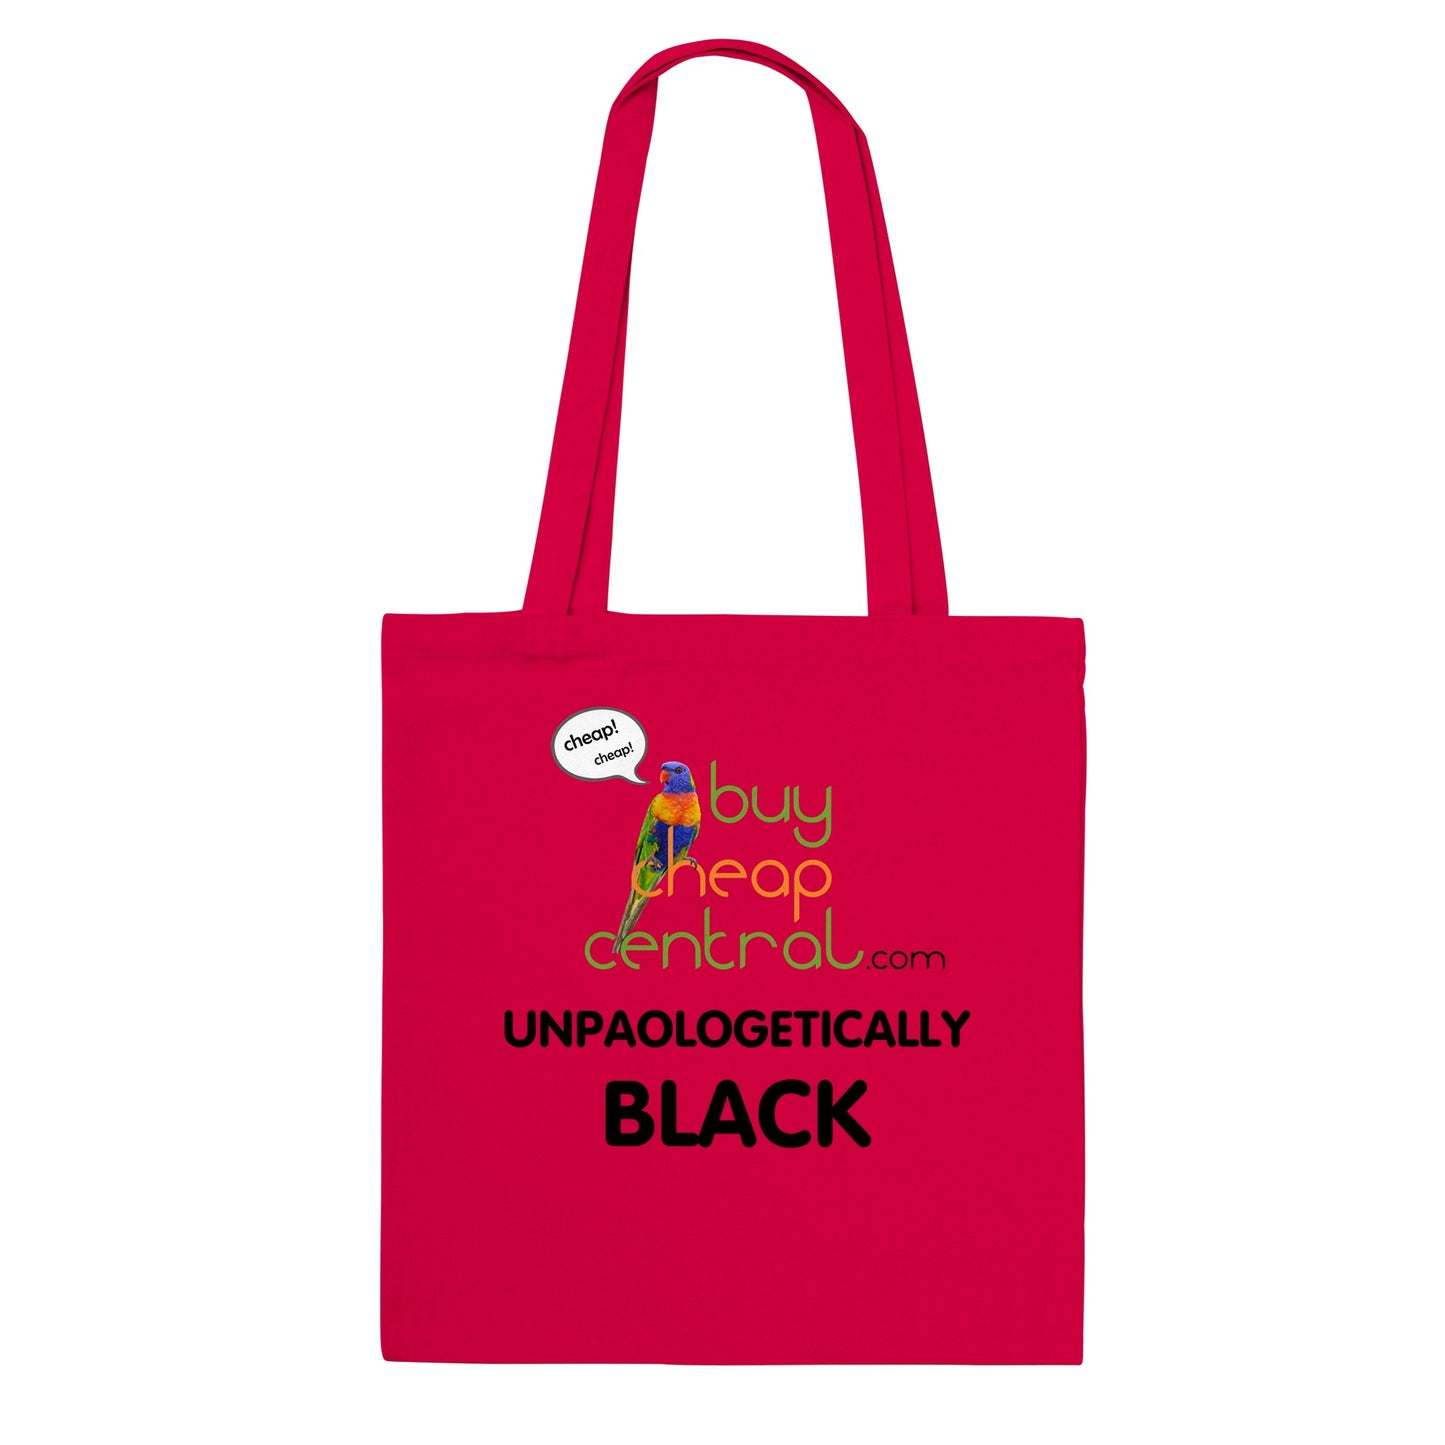 Unapologetically BLACK - Classic Tote Bag